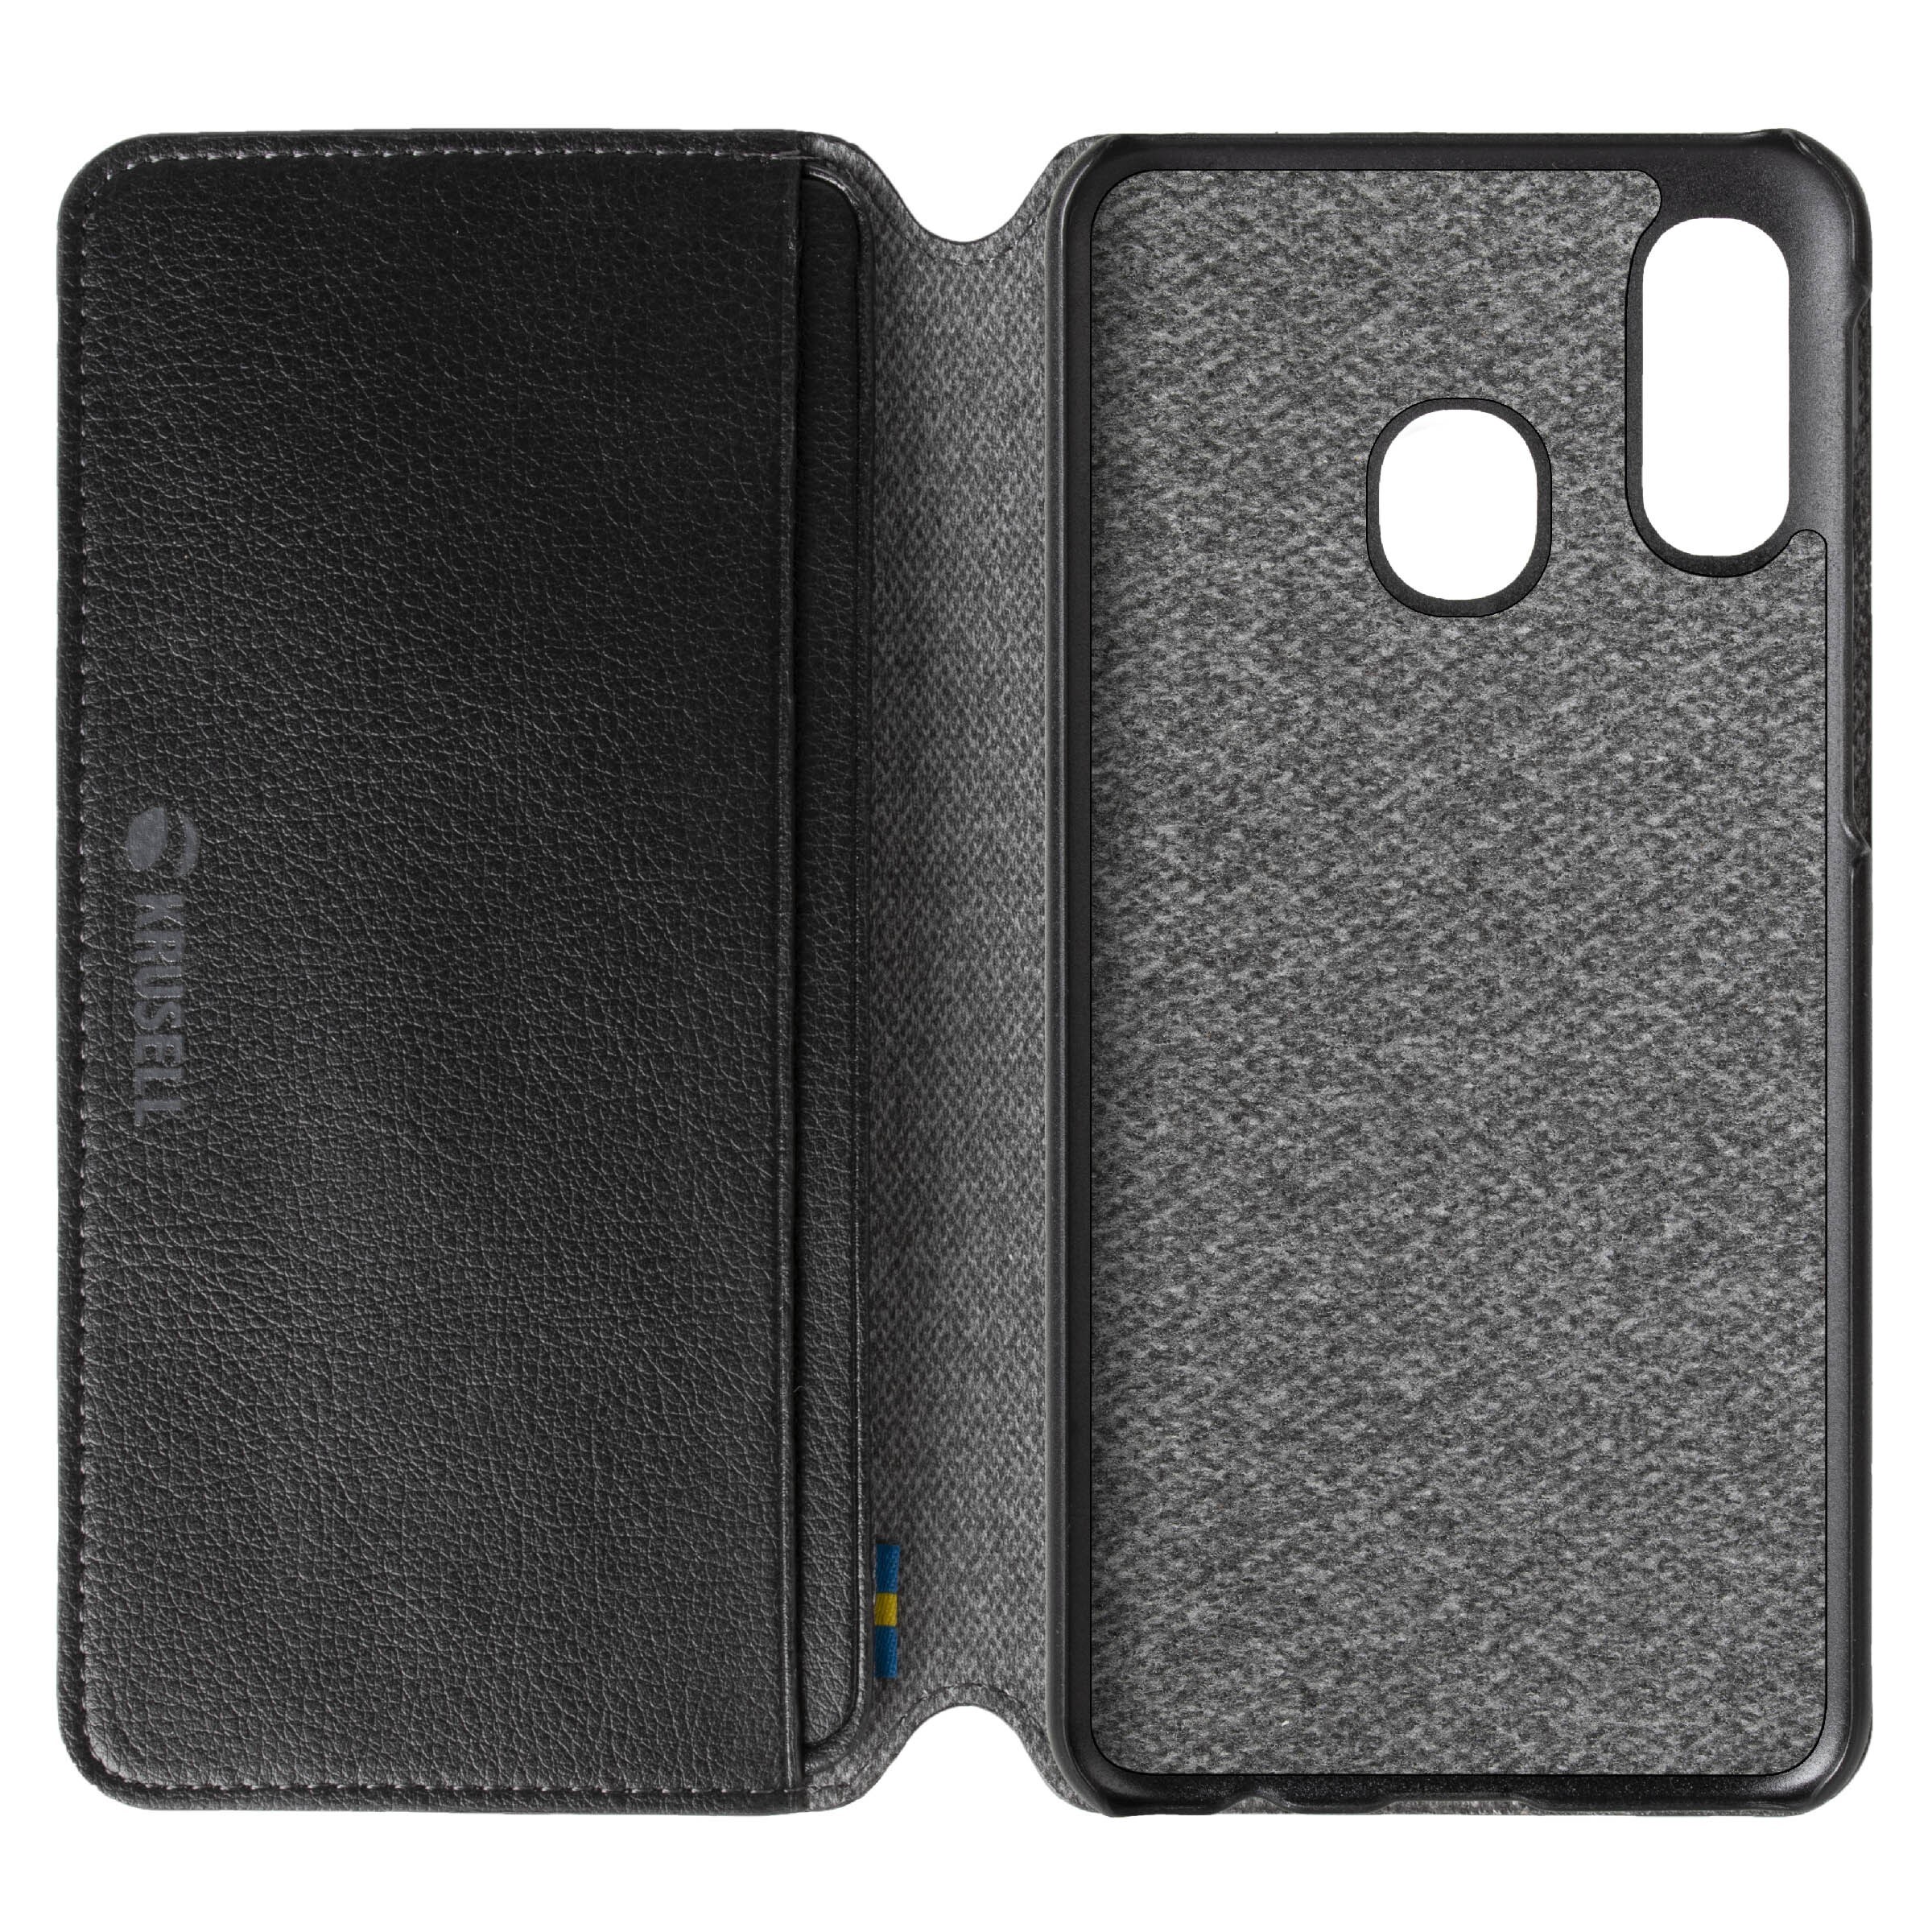 Krusell Pixbo 4 Card Slim Wallet Case Samsung Galaxy A40